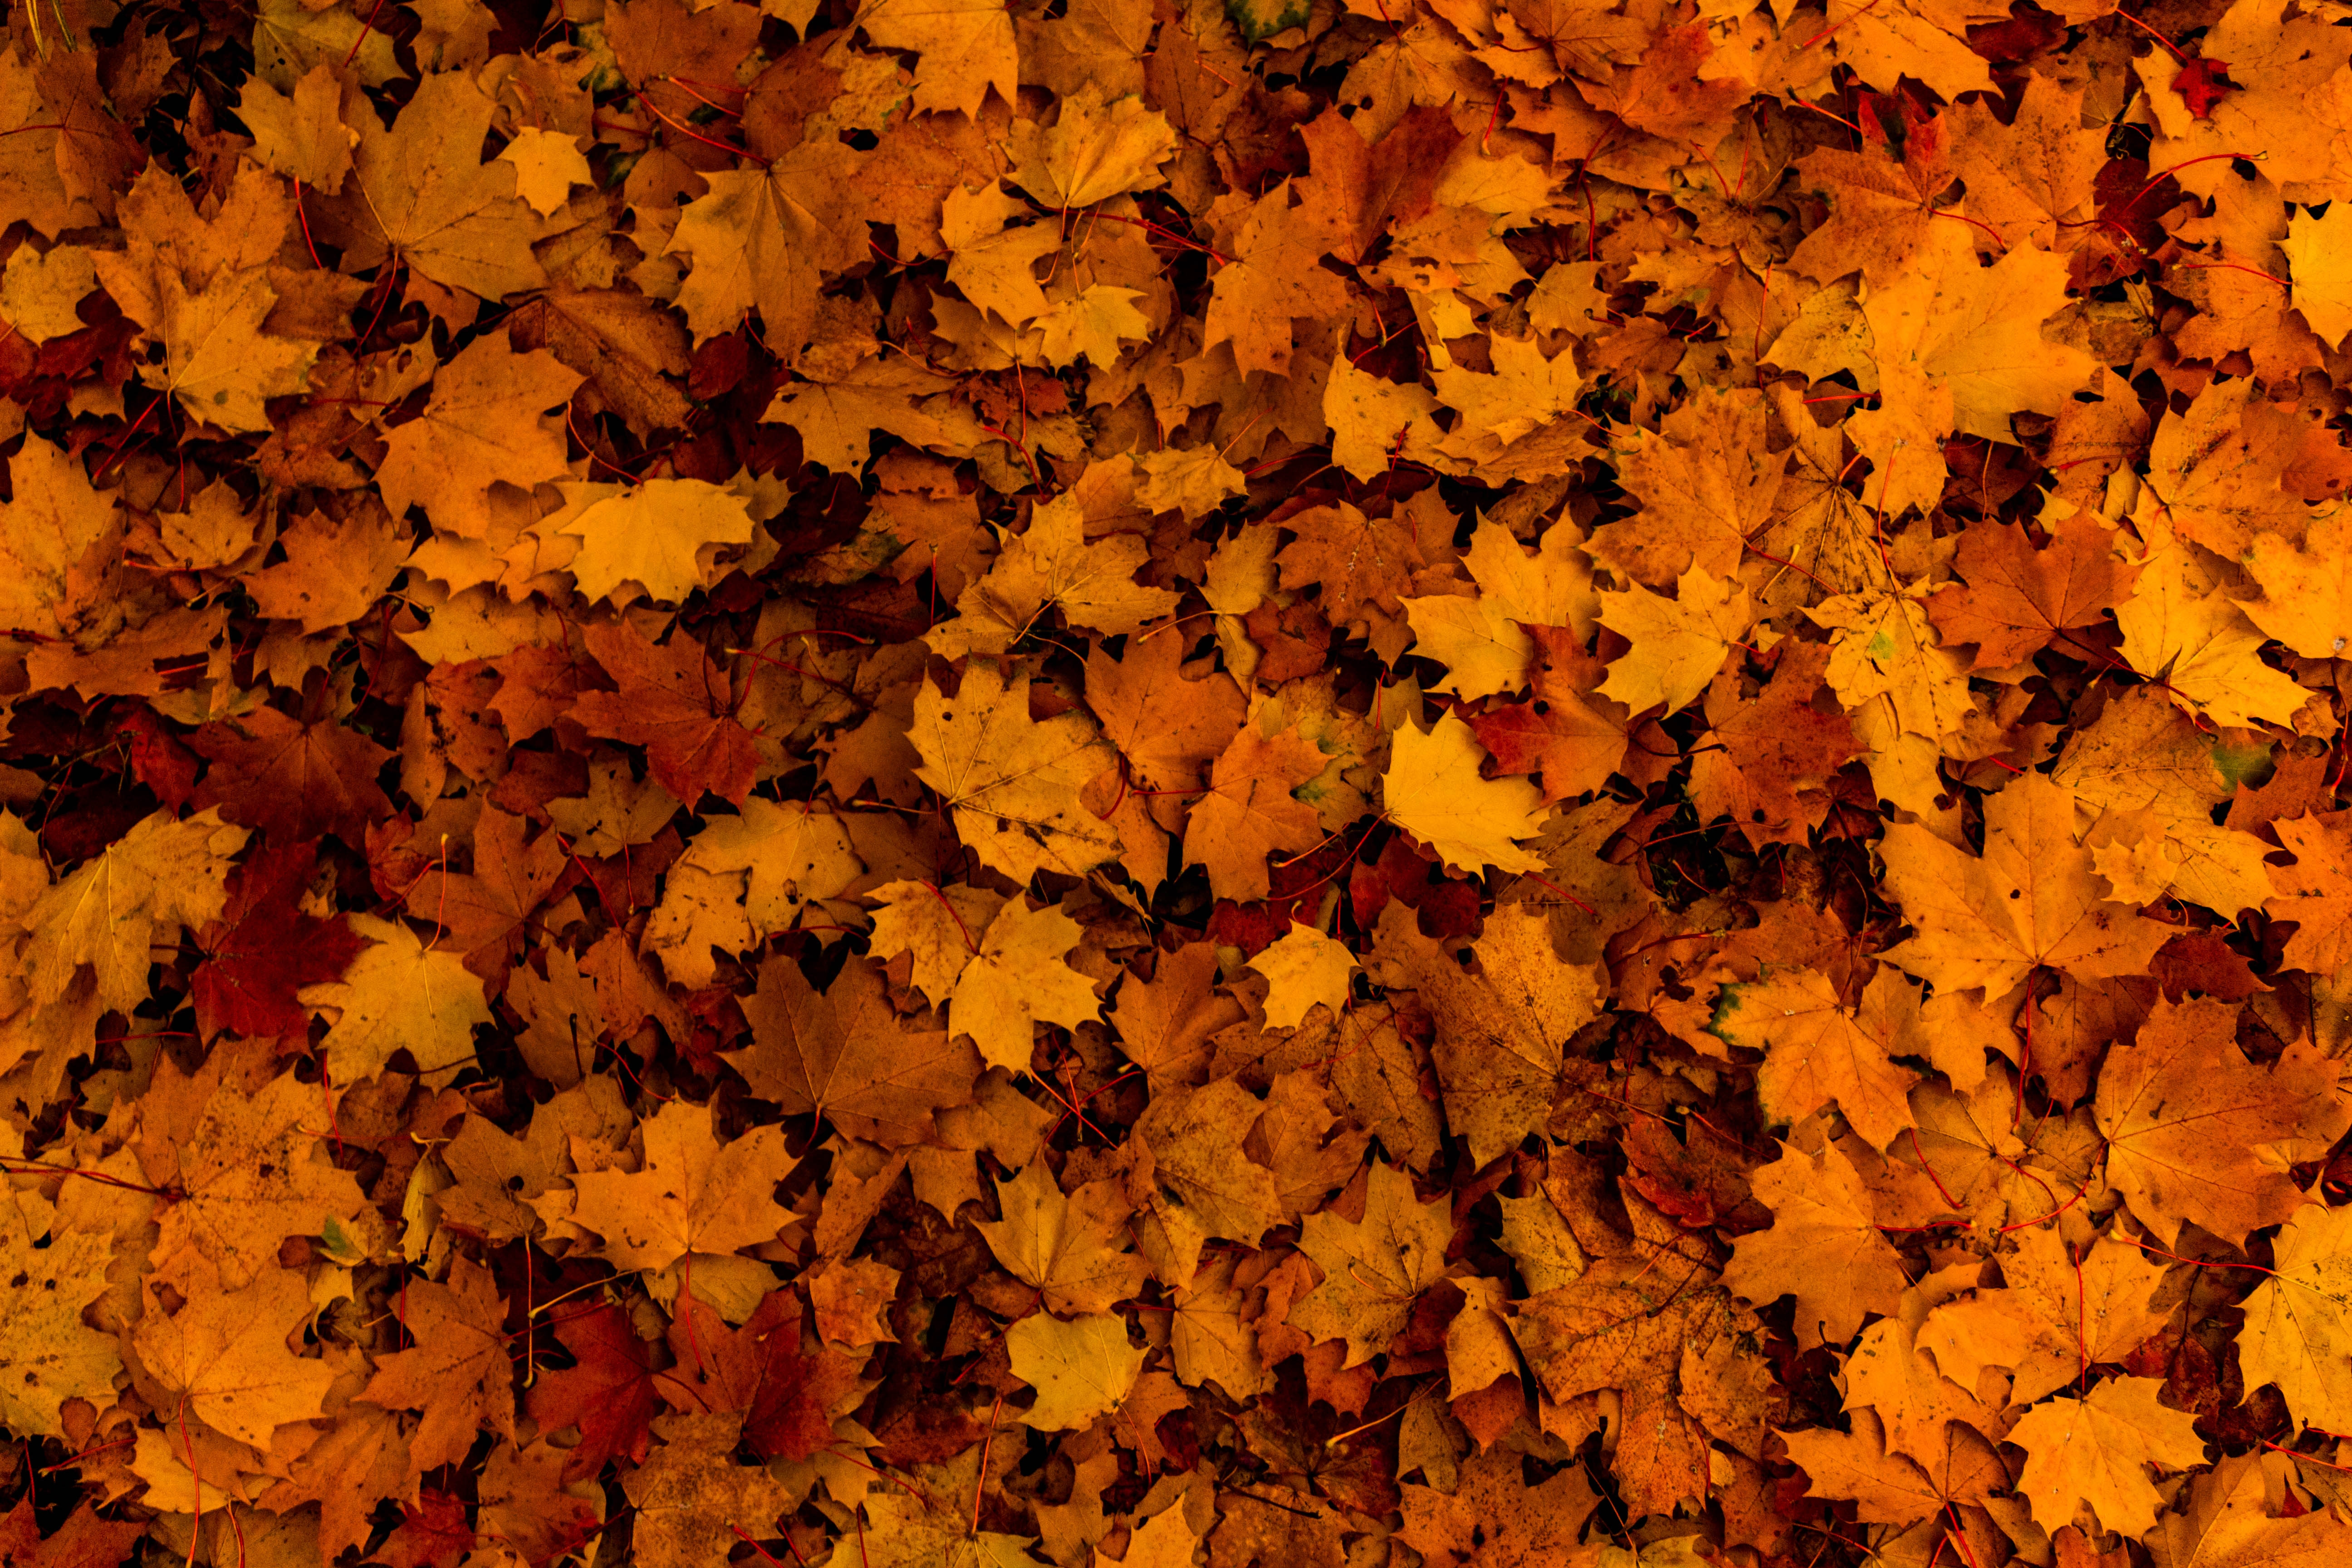 HD wallpaper, Foliage, Maple Leaves, Fallen Leaves, 5K, Texture, Autumn, Seasons